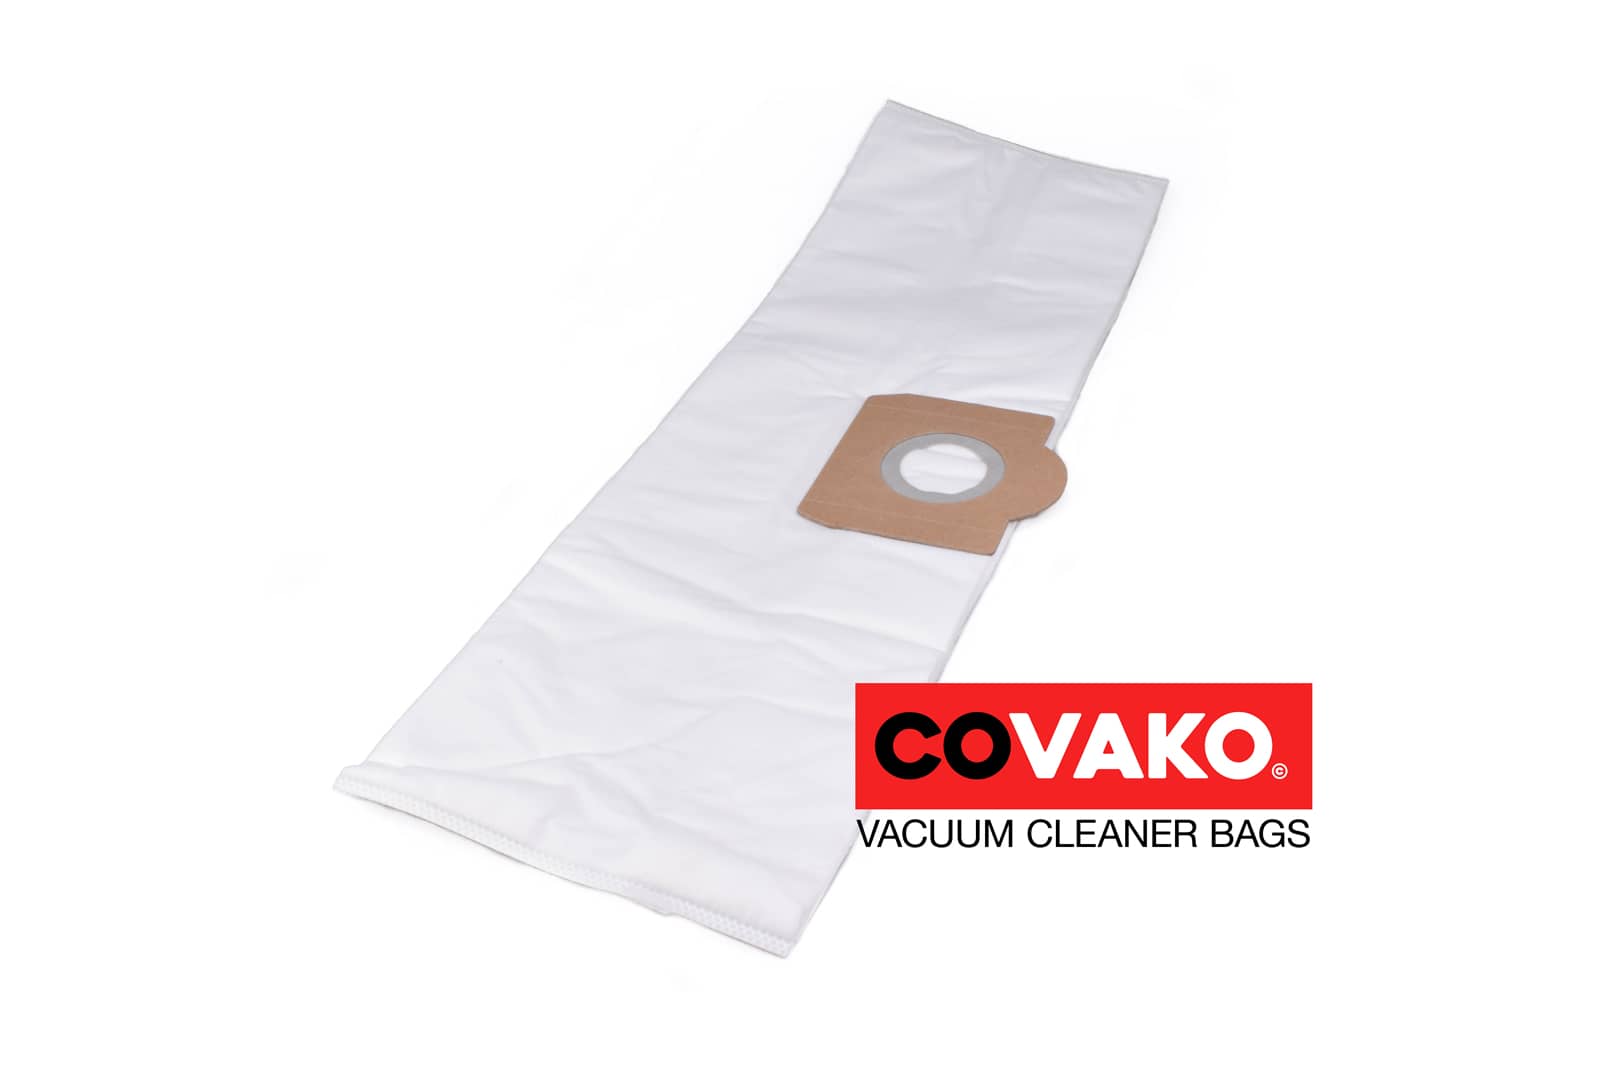 Fakir GS 27 / Synthesis - Fakir vacuum cleaner bags